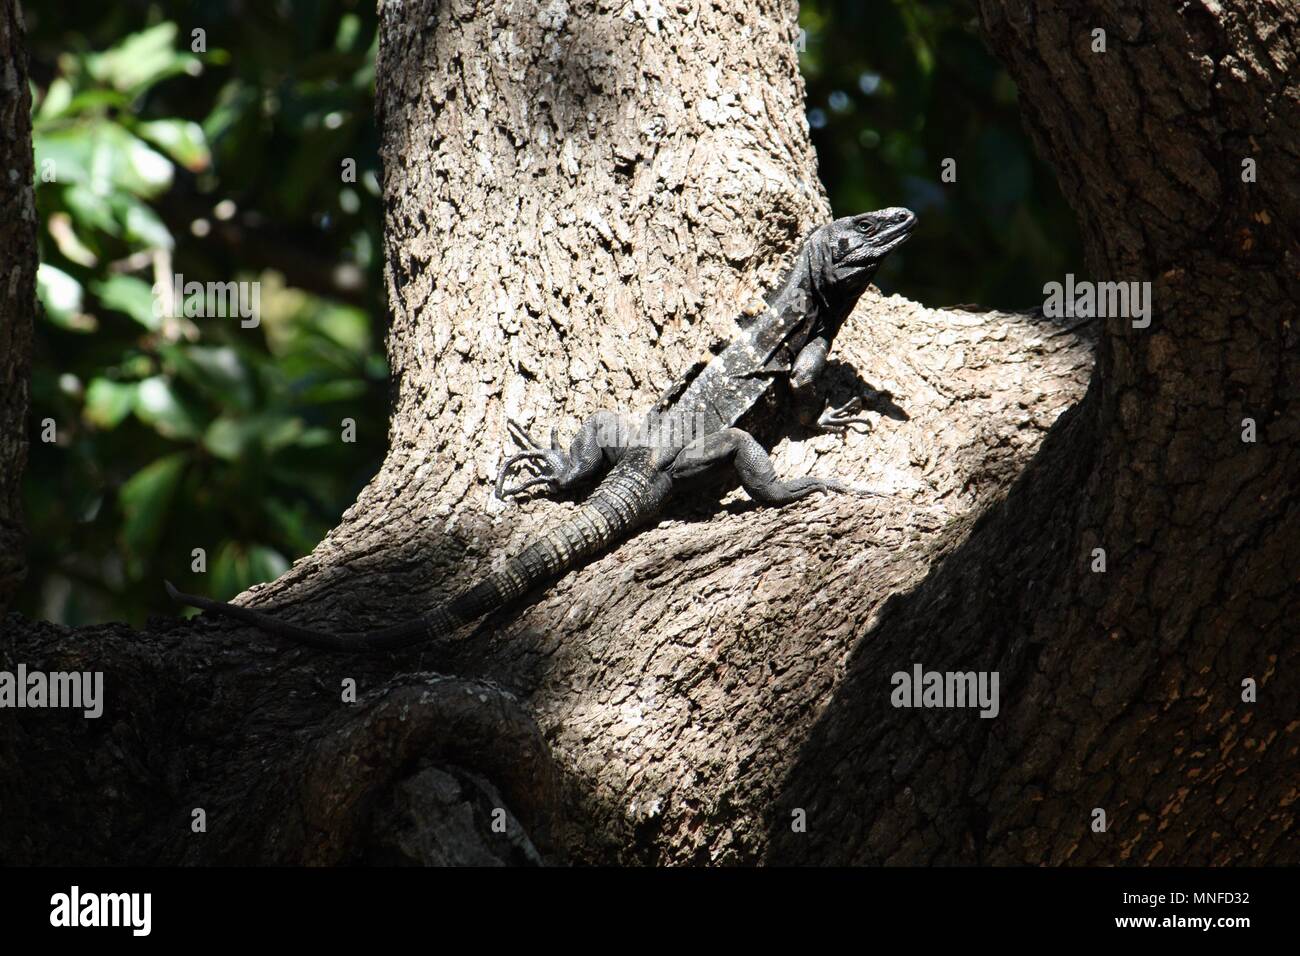 Iguana sunning itself in the crook of a tree. Stock Photo